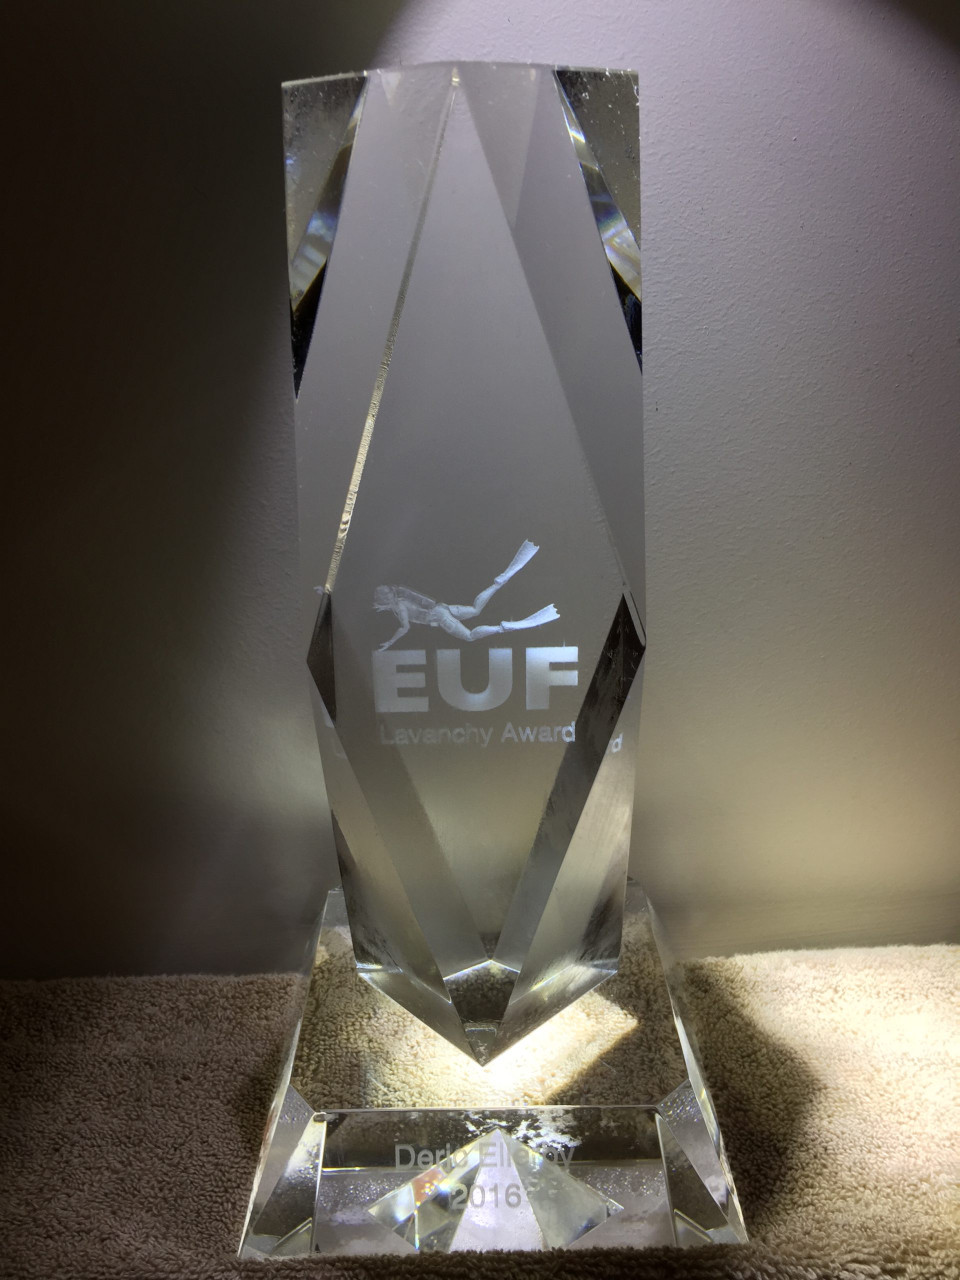 EUF-Lavanchy-Award